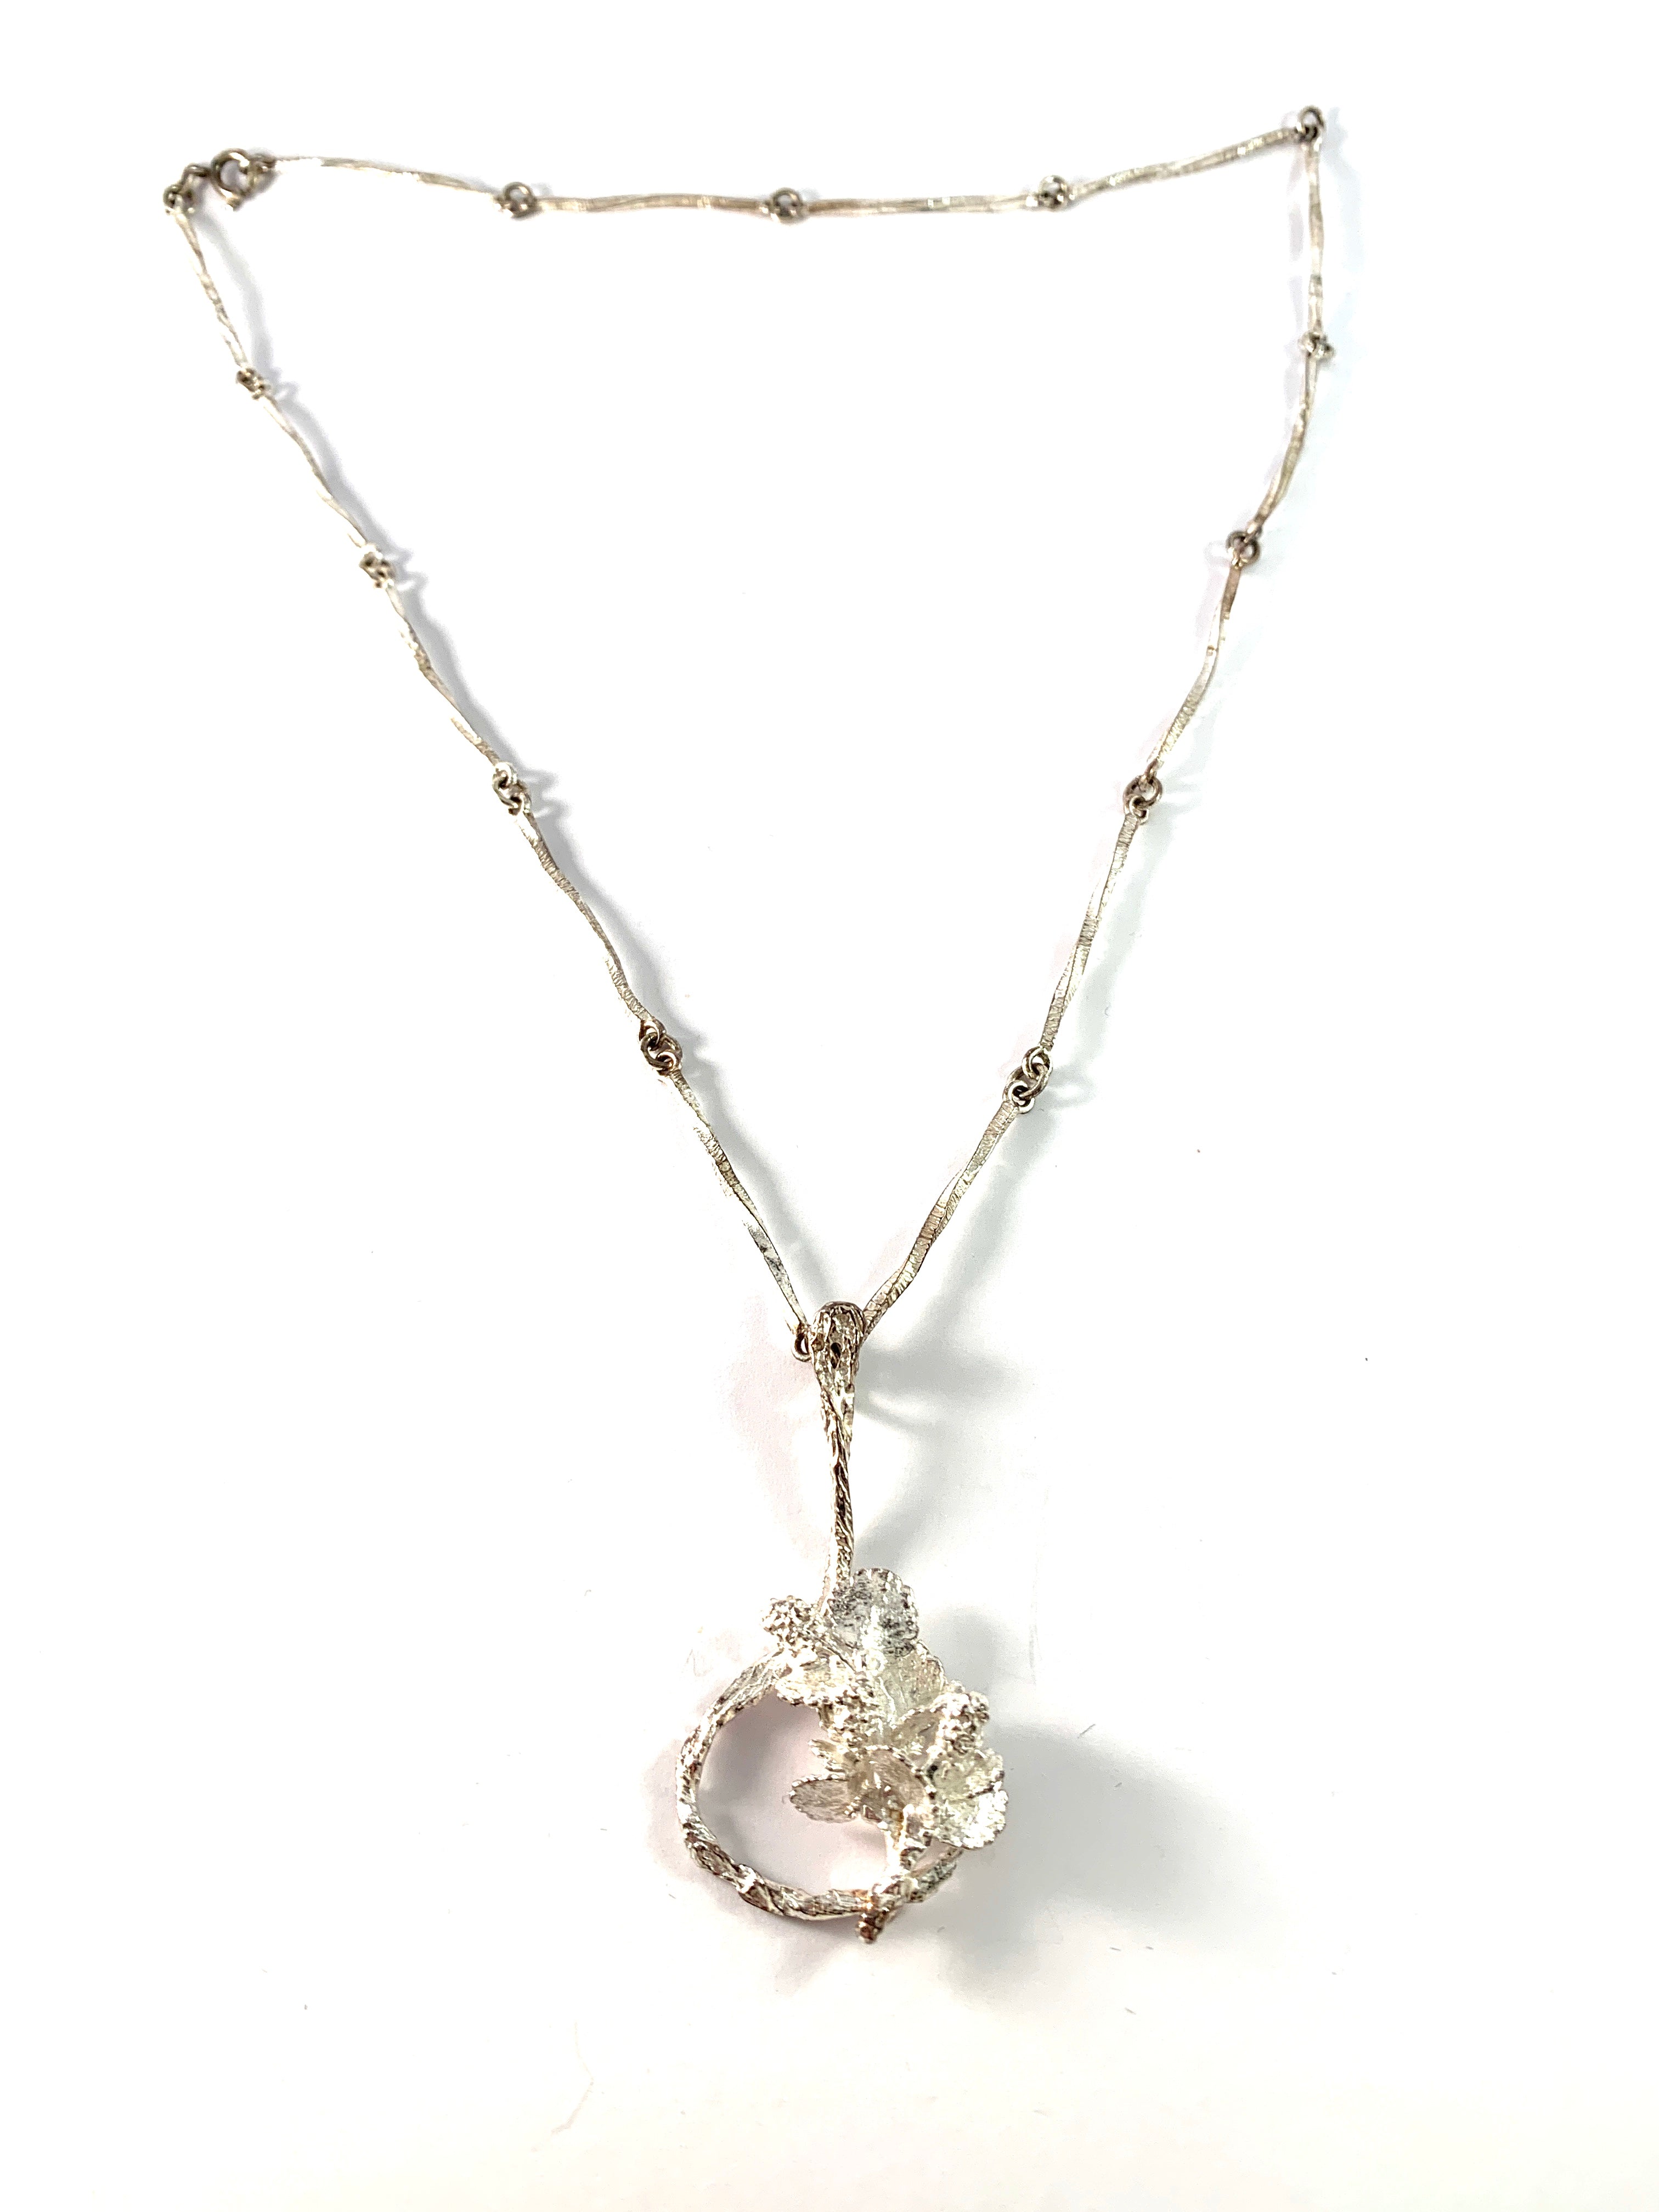 Flora Danica, Denmark. Vintage Sterling Silver Pendant Necklace. Boxed.